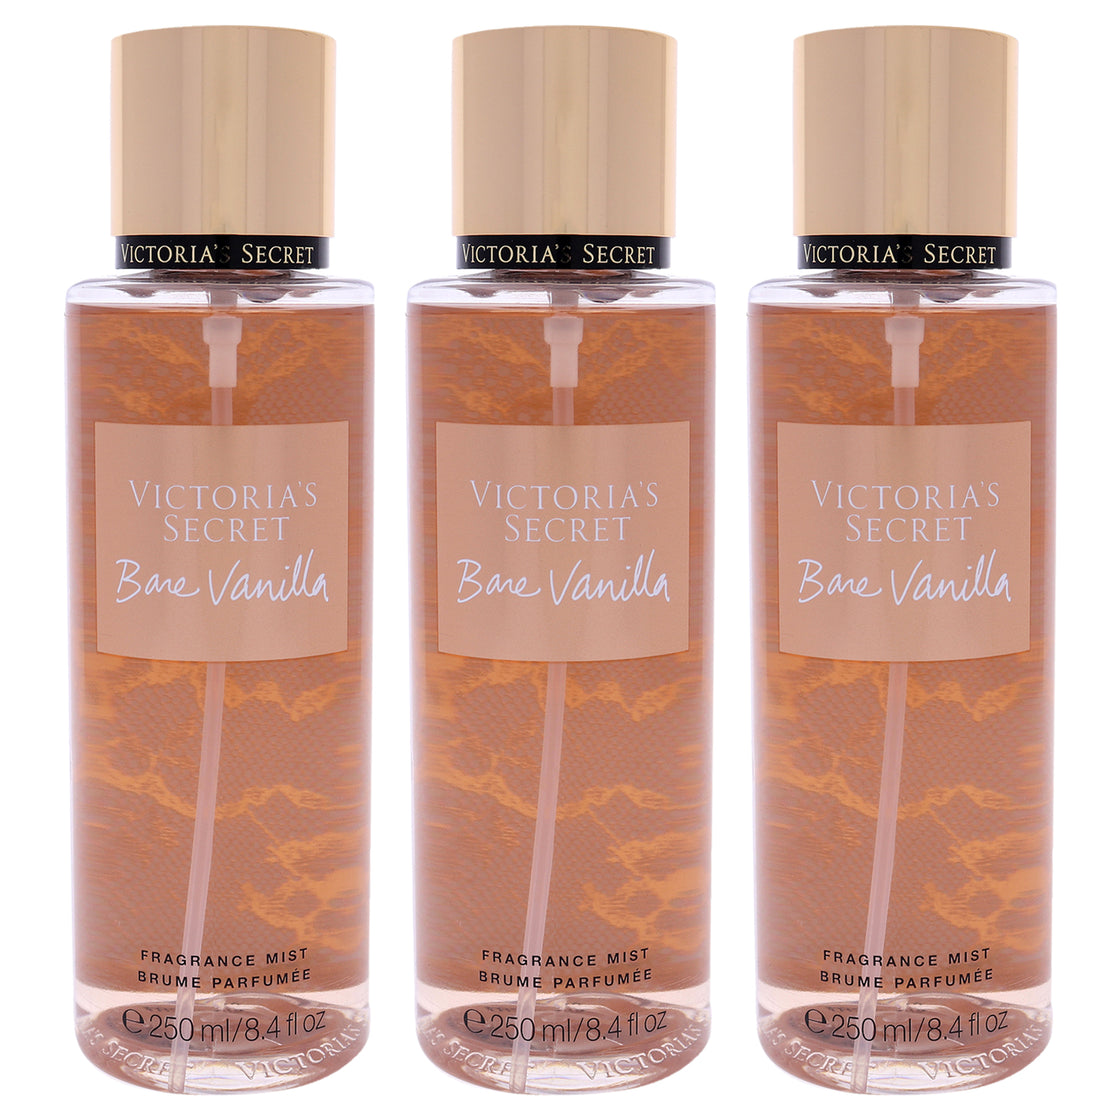 Bare Vanilla by Victorias Secret for Women - 8.4 oz Fragrance Mist - Pack of 3